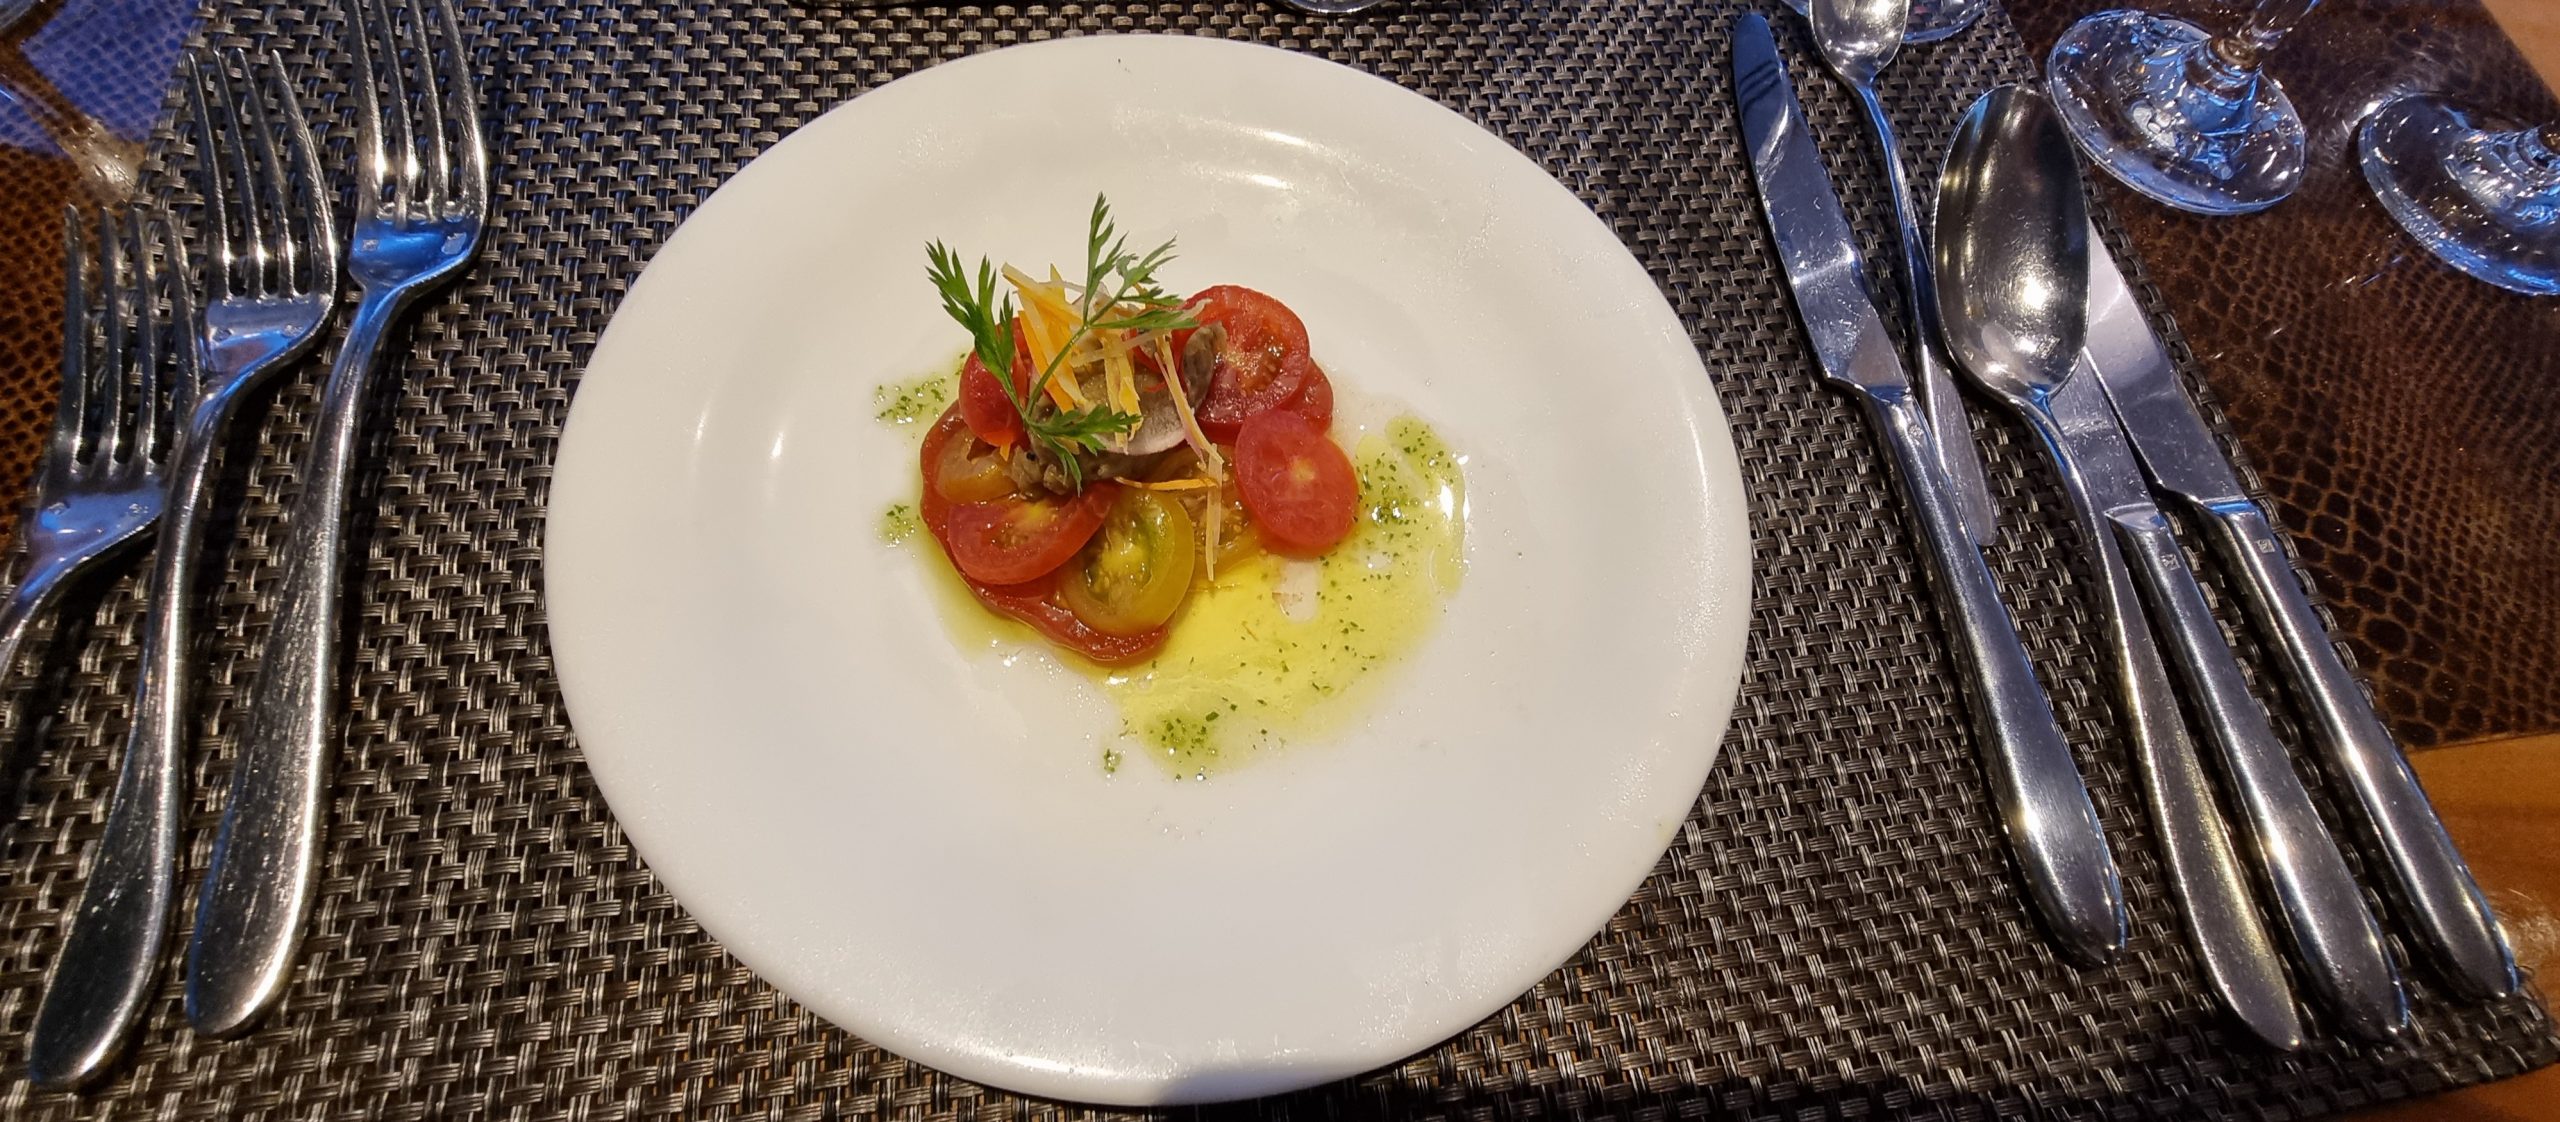 Heirloom Tomato Carpaccio und Eggplant Caviar auf der MS AmaPrima